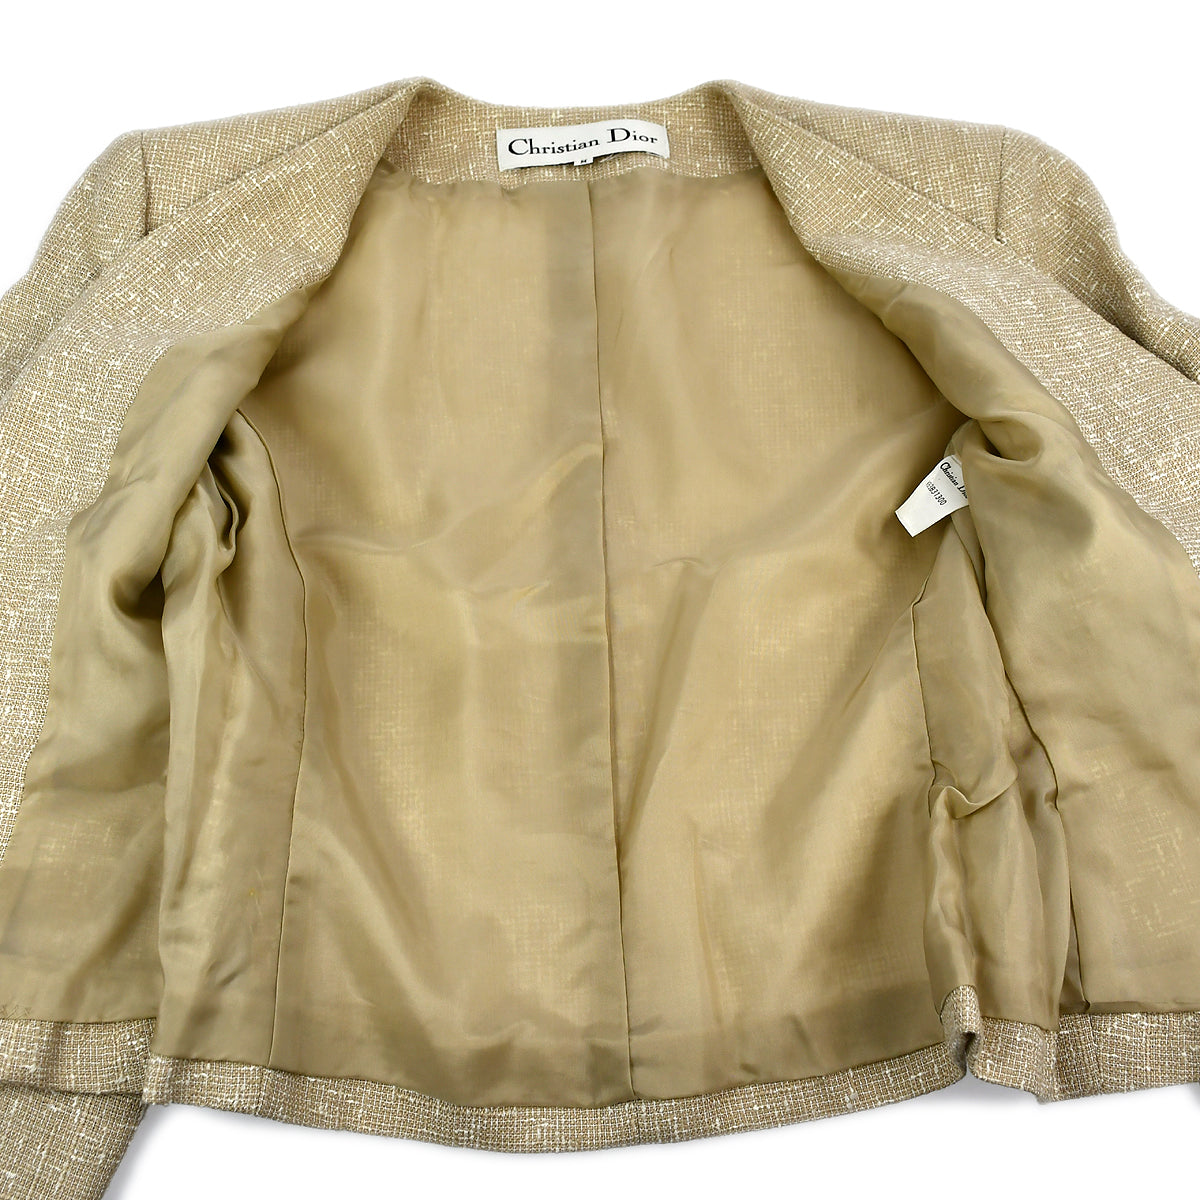 Christian Dior Single Breasted Jacket Beige 